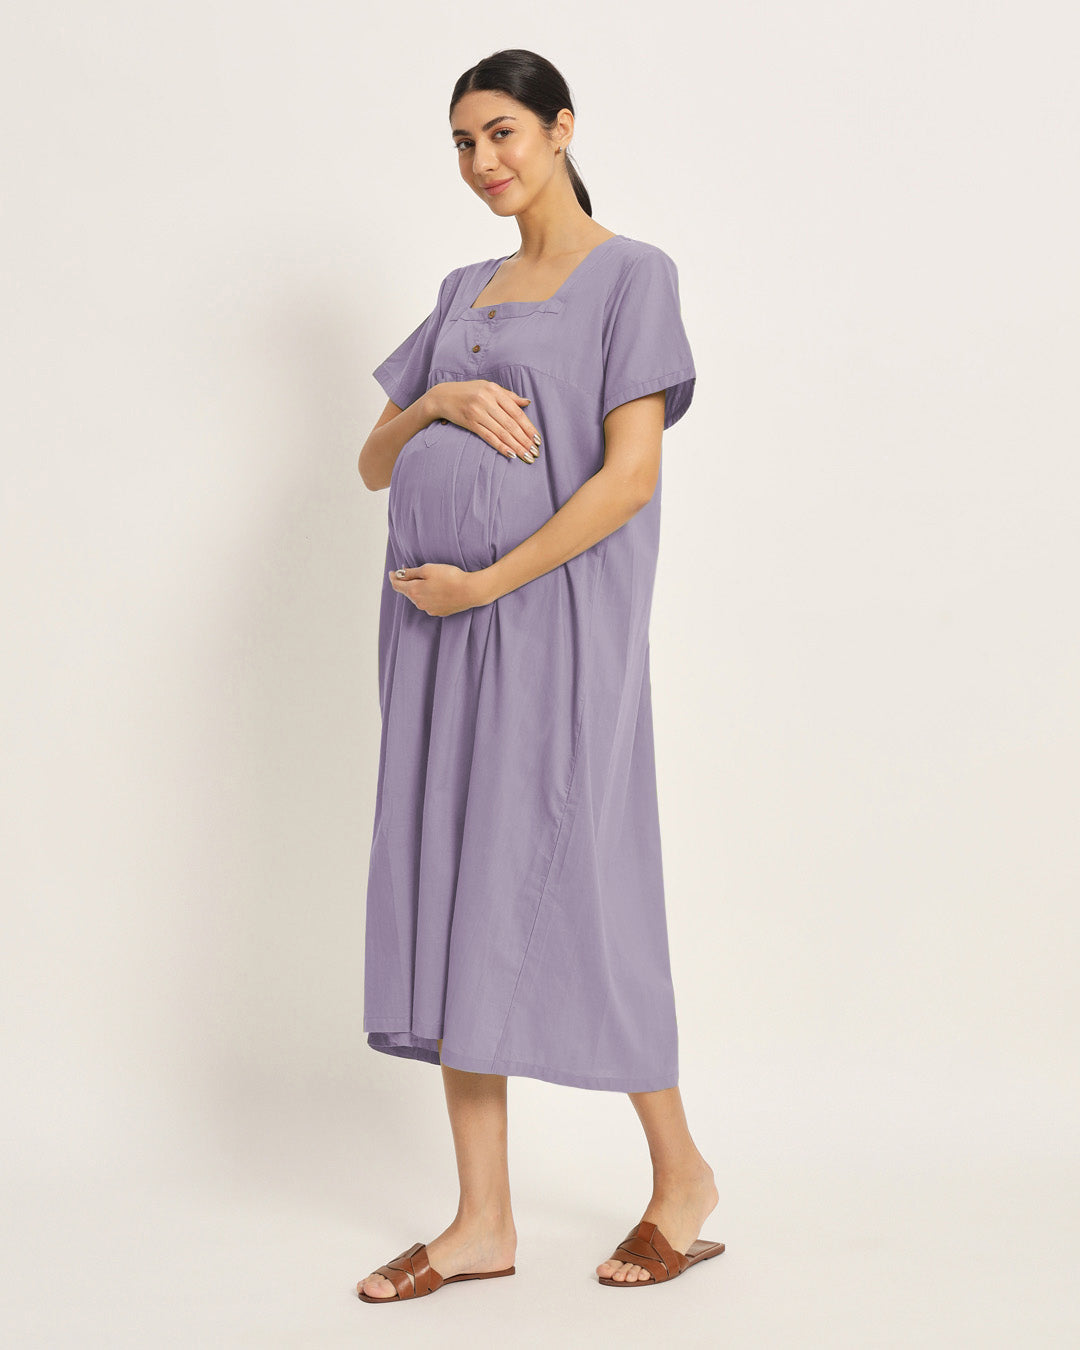 Combo: Lilac & Wisteria Purple Bump Blessing Maternity & Nursing Dress - Set of 2